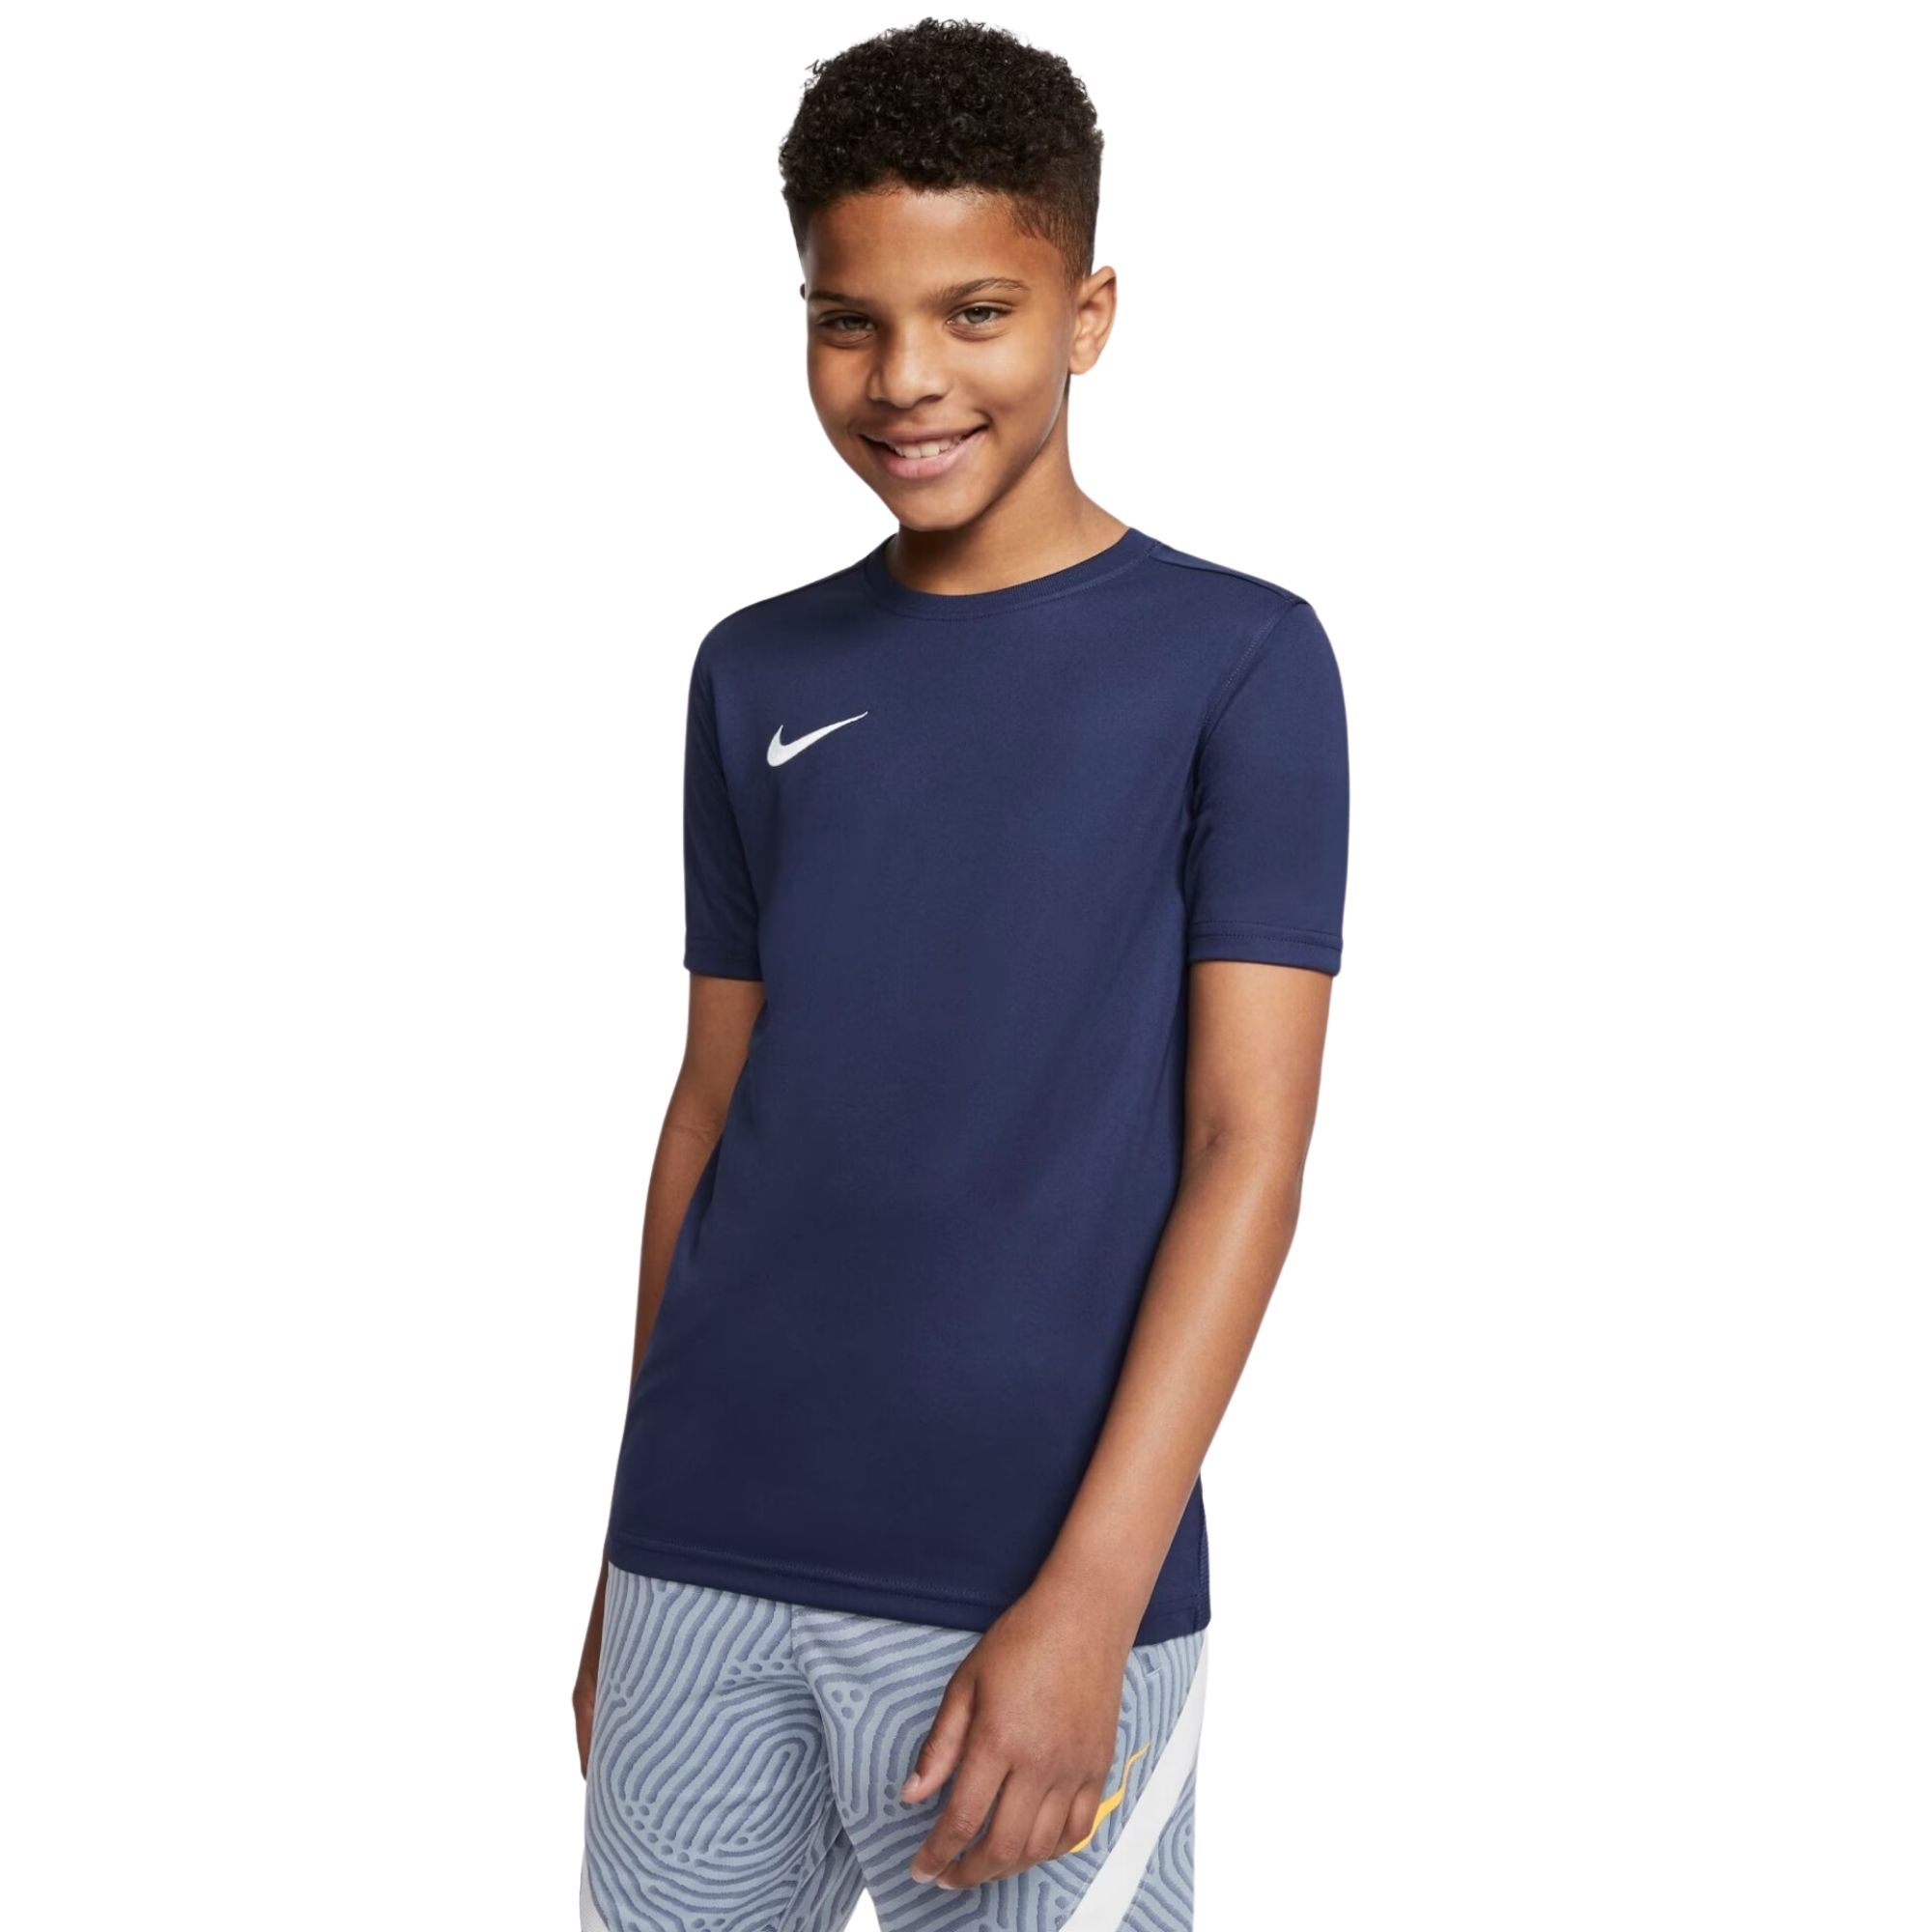 Calça Nike Sportswear Essential Infantil - Preta/Branca - Bayard Esportes